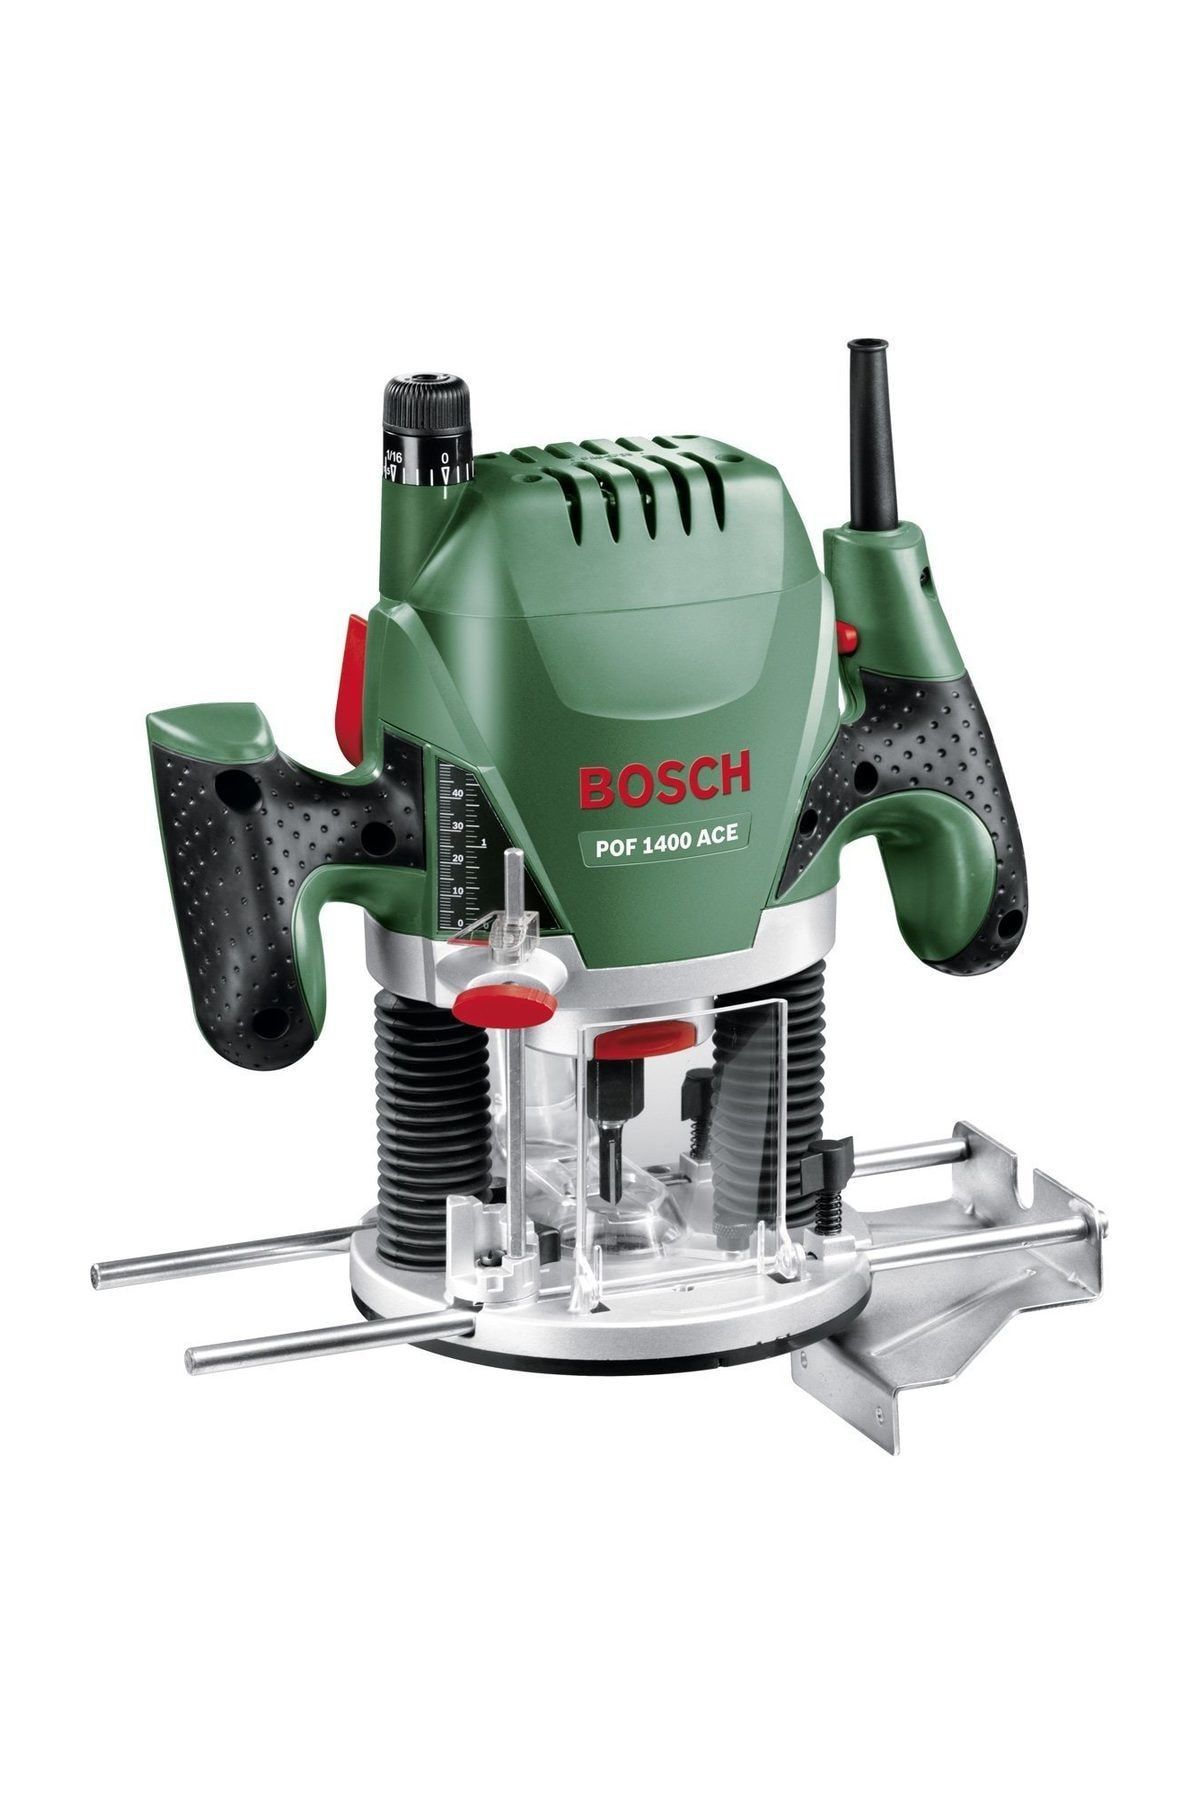 Bosch Pof 1400 Ace Freze Makinesi - 060326C800